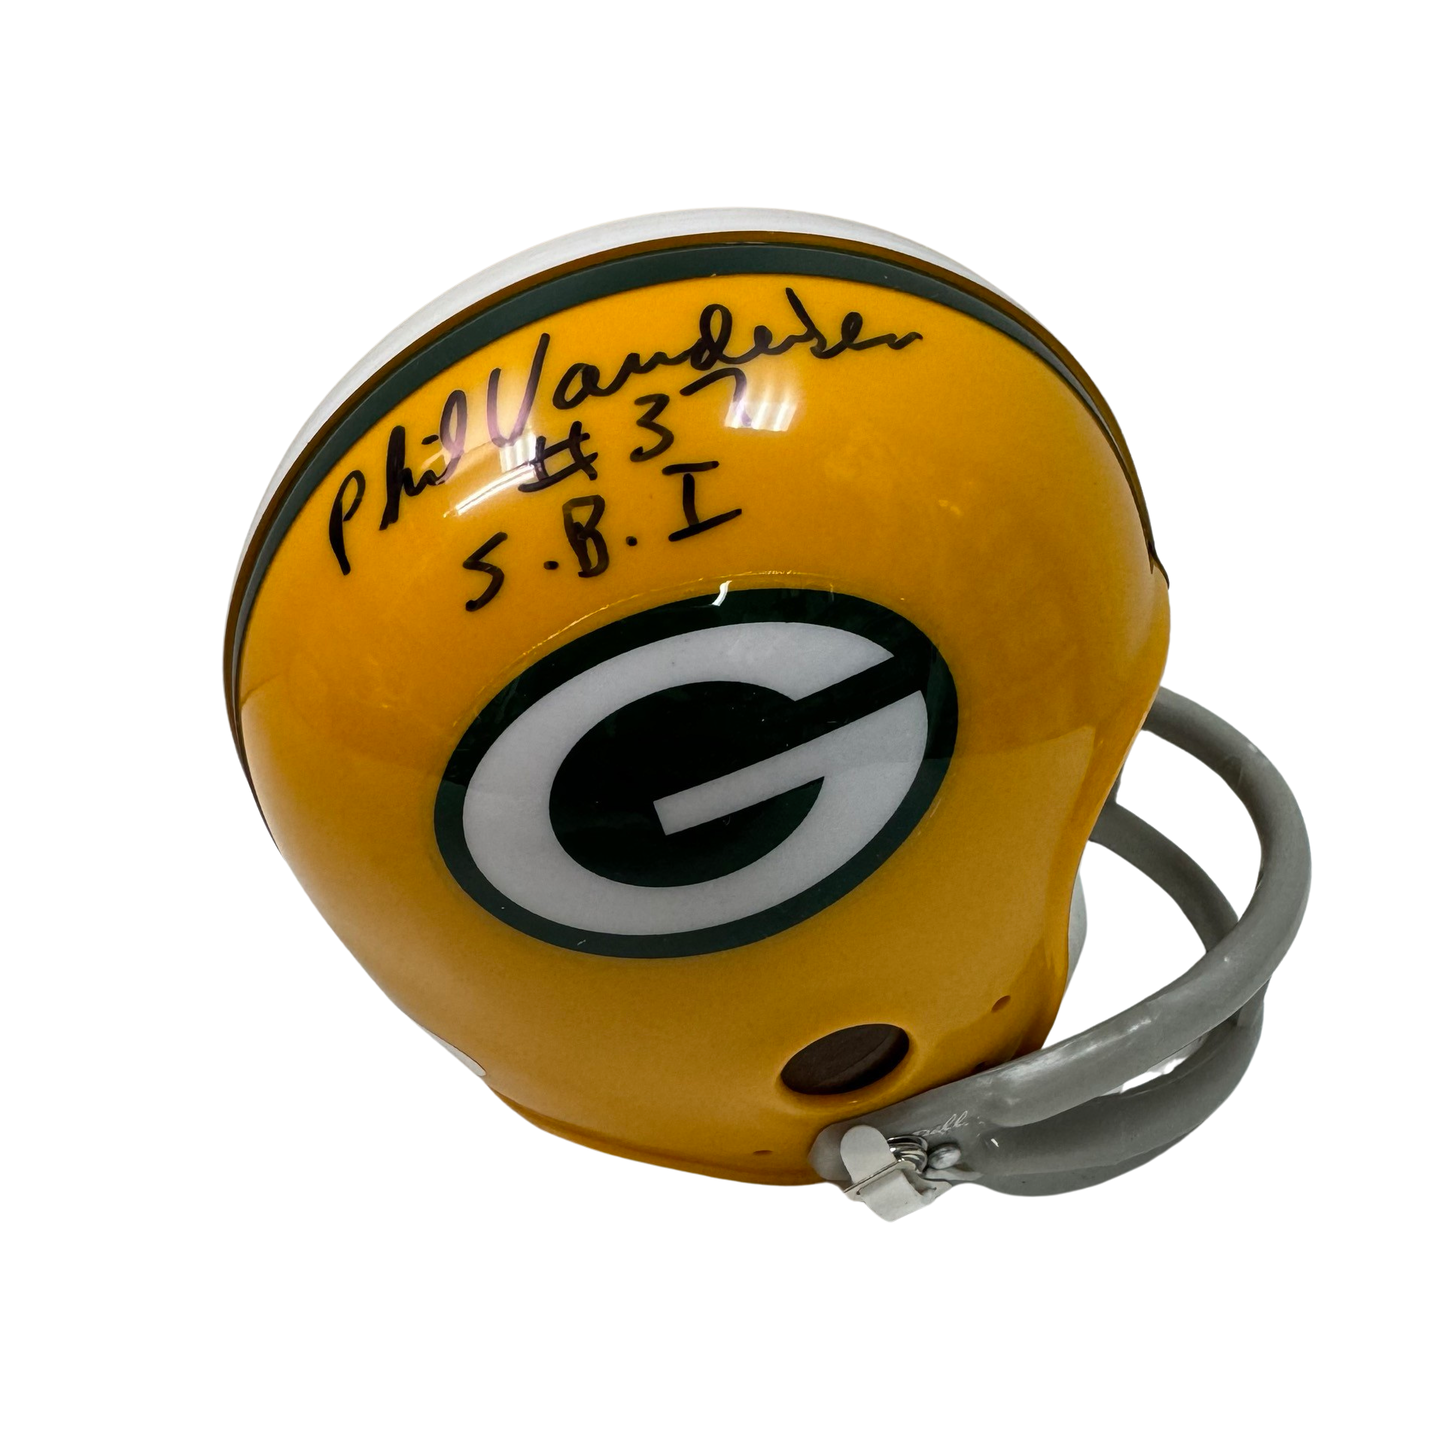 Phil Vandersea Autographed Green Bay Packers Mini Helmet “SB 1” Inscription JSA